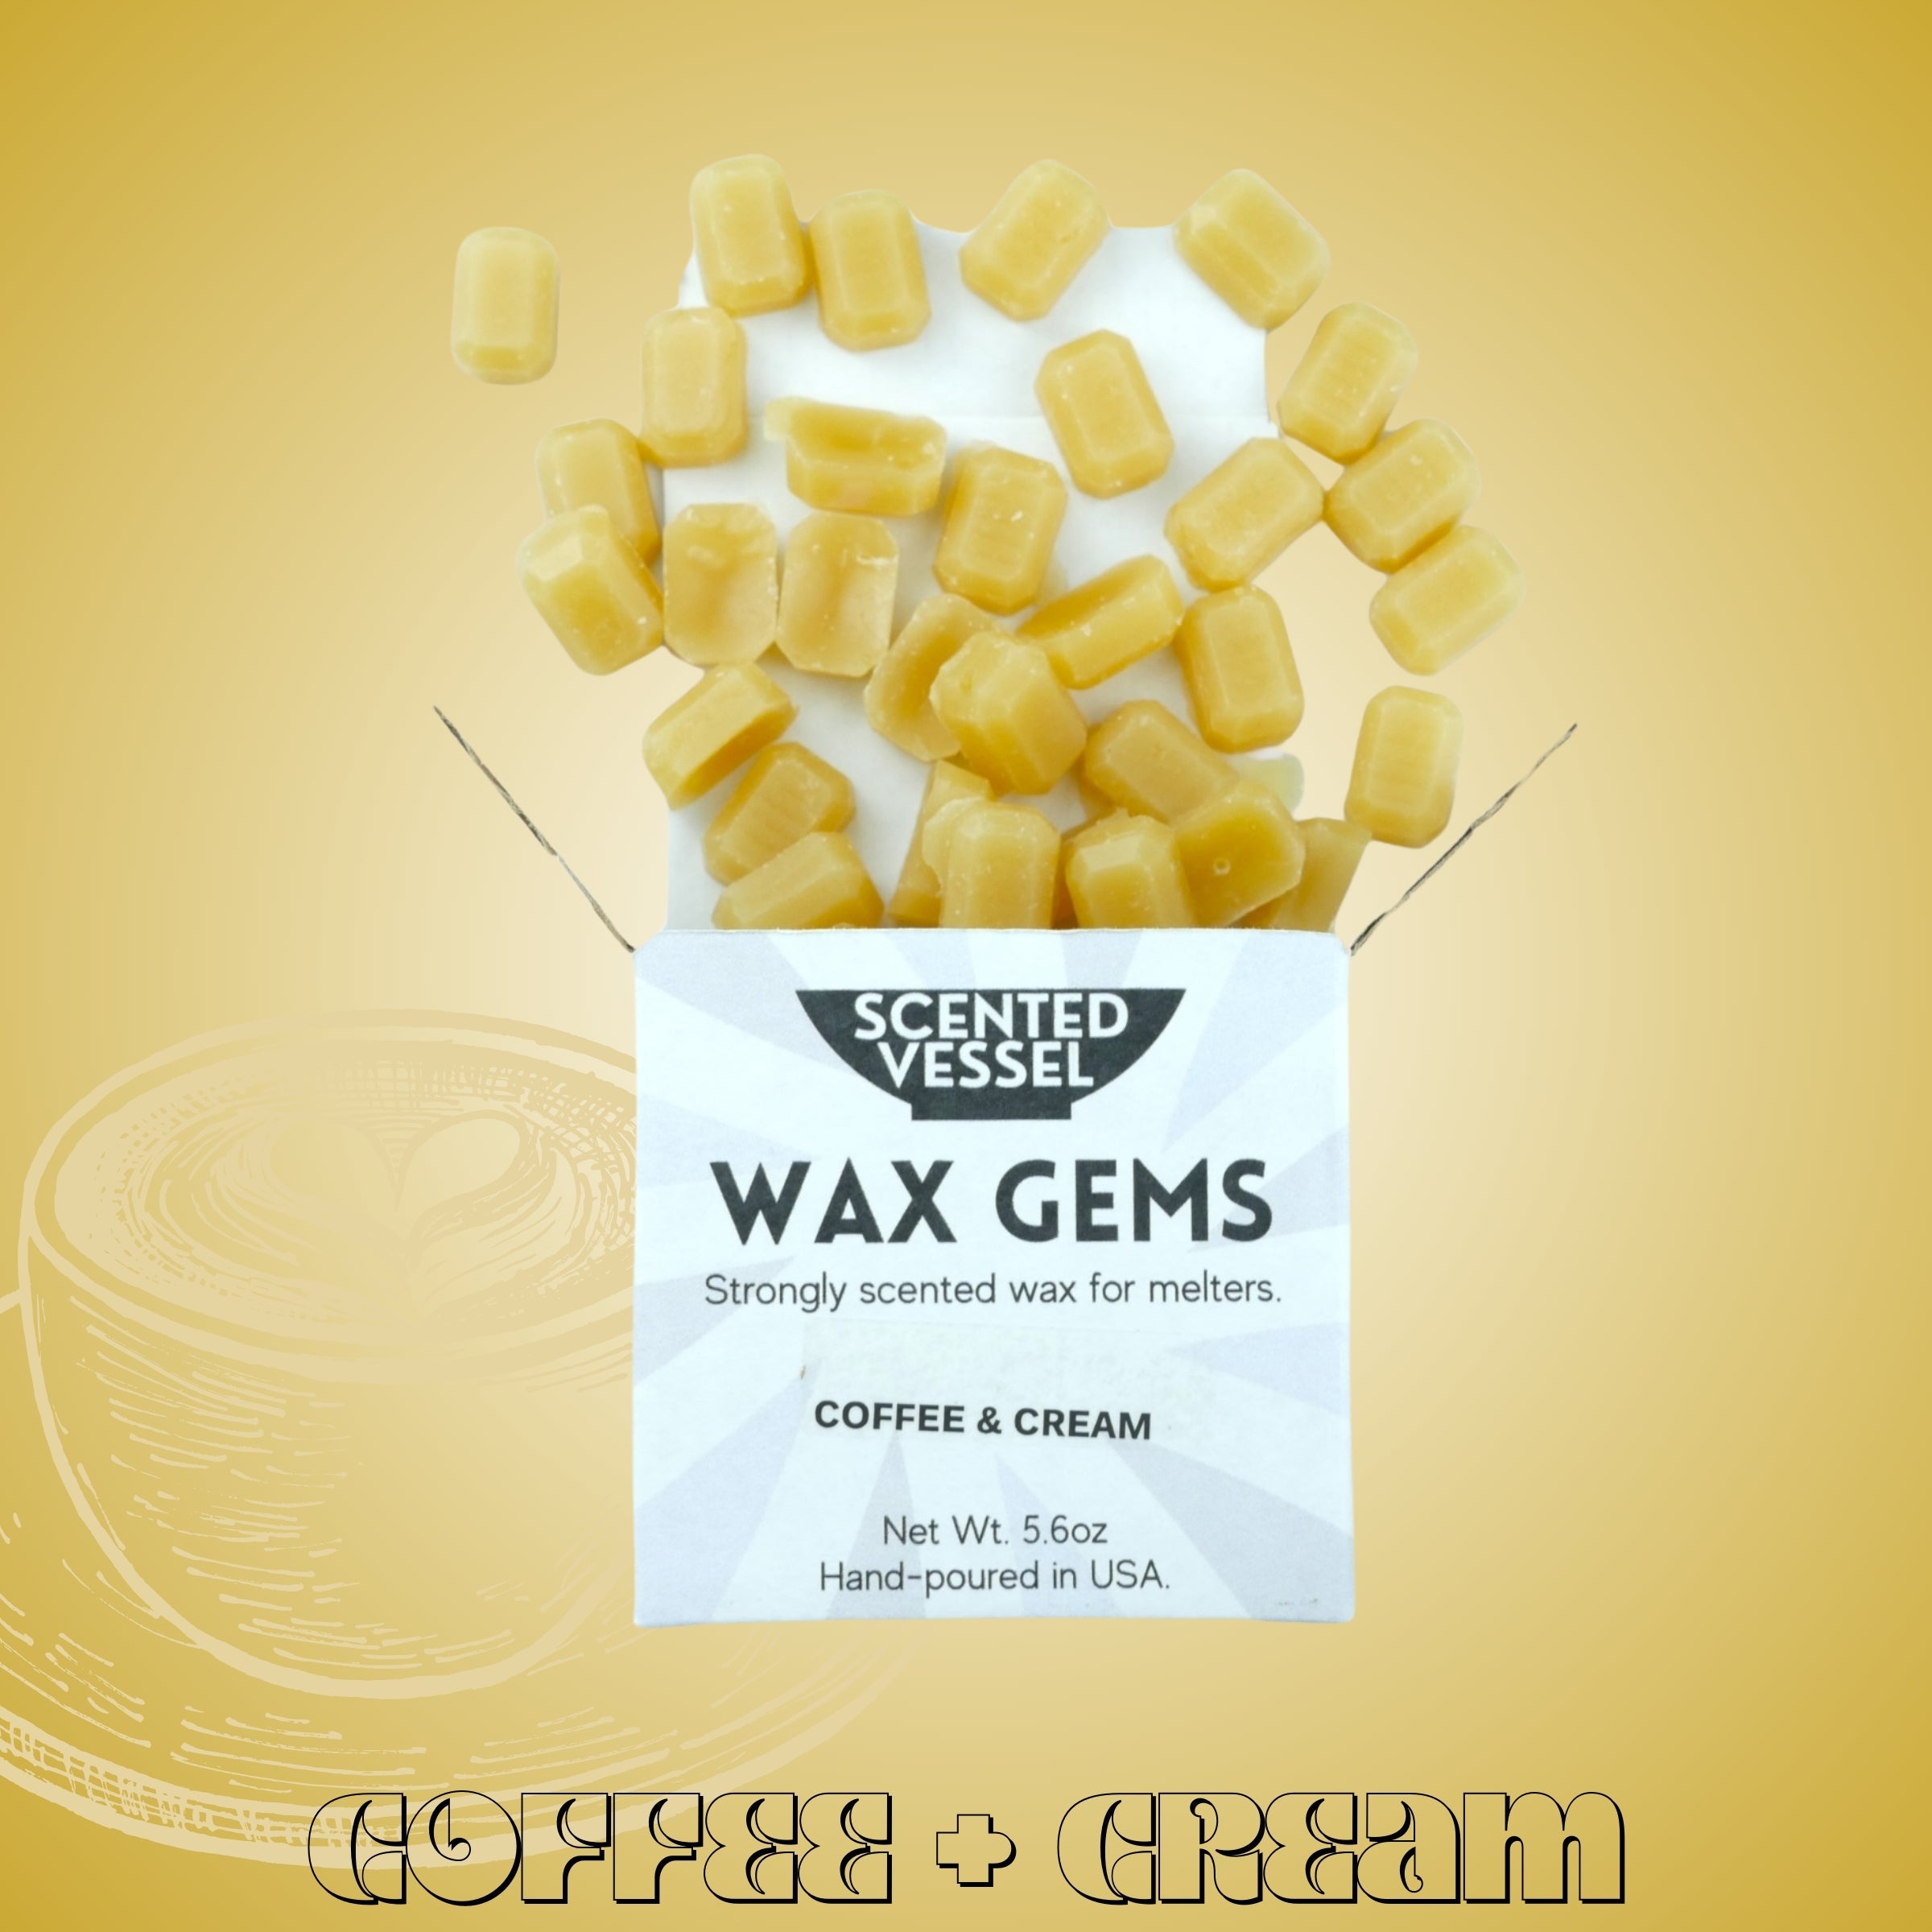 Coffee & Cream 5.6oz Wax Gems by Scented Vessel